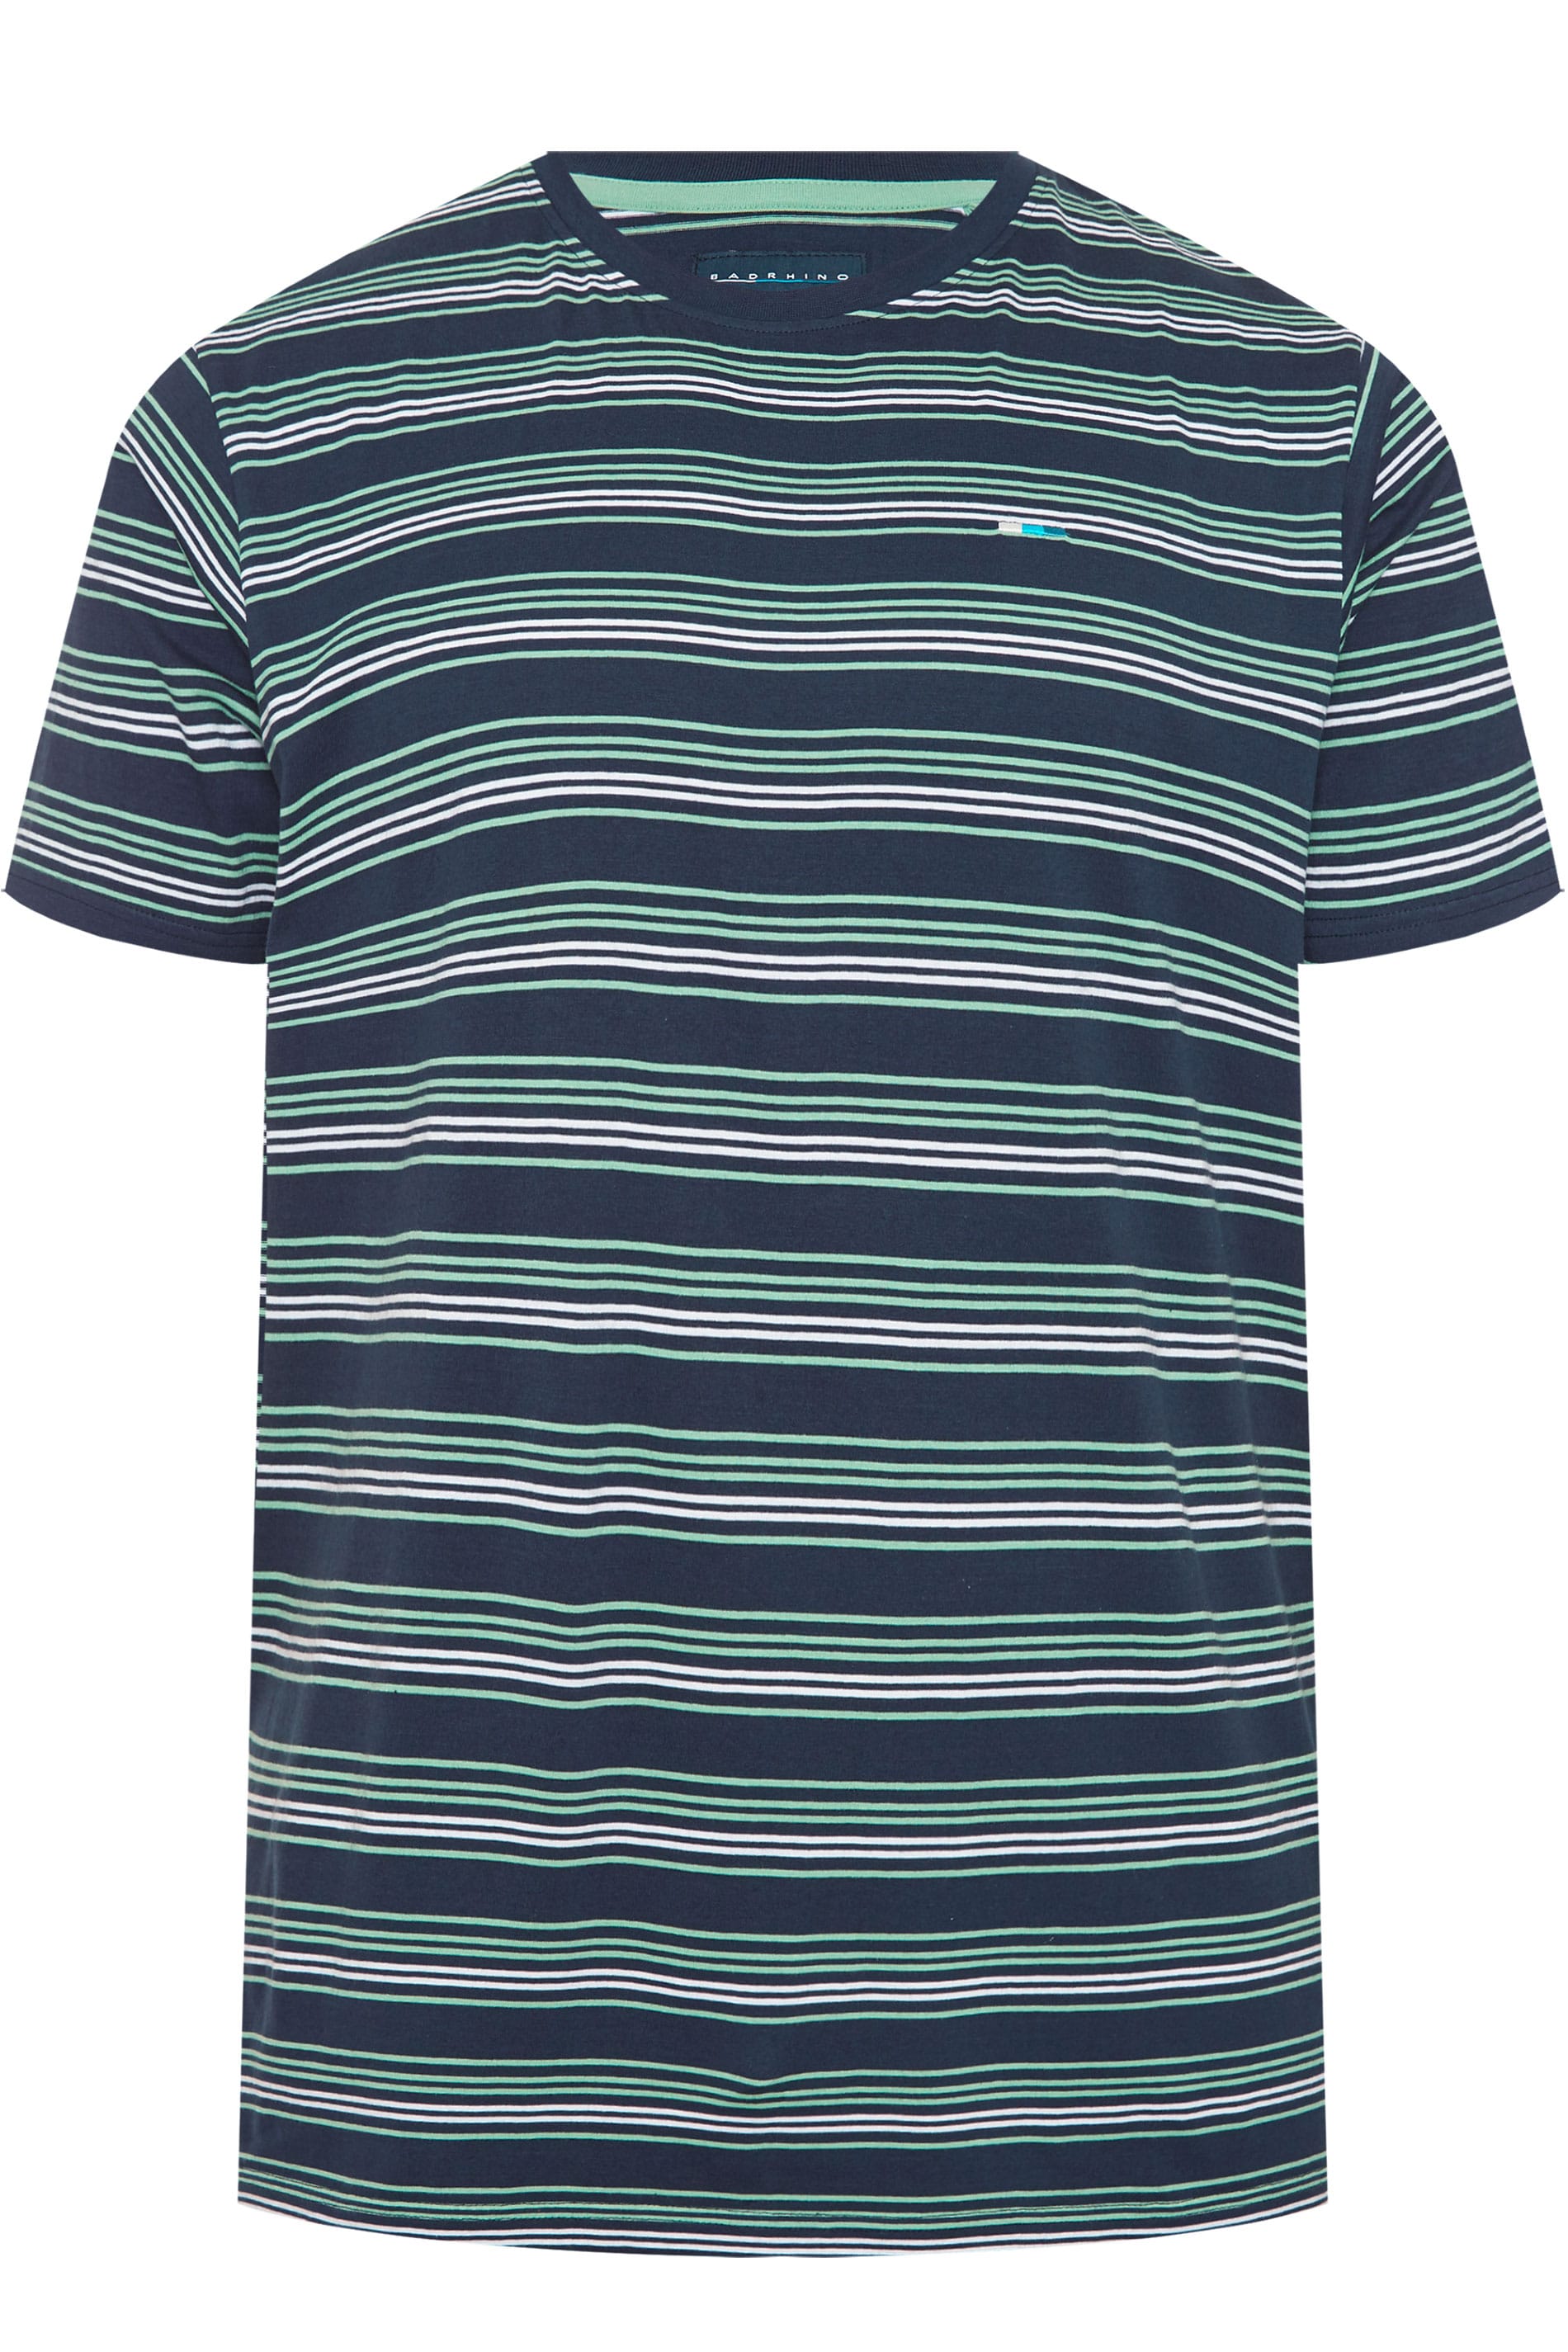 BadRhino Navy & Blue Stripe T-Shirt_15d5.jpg